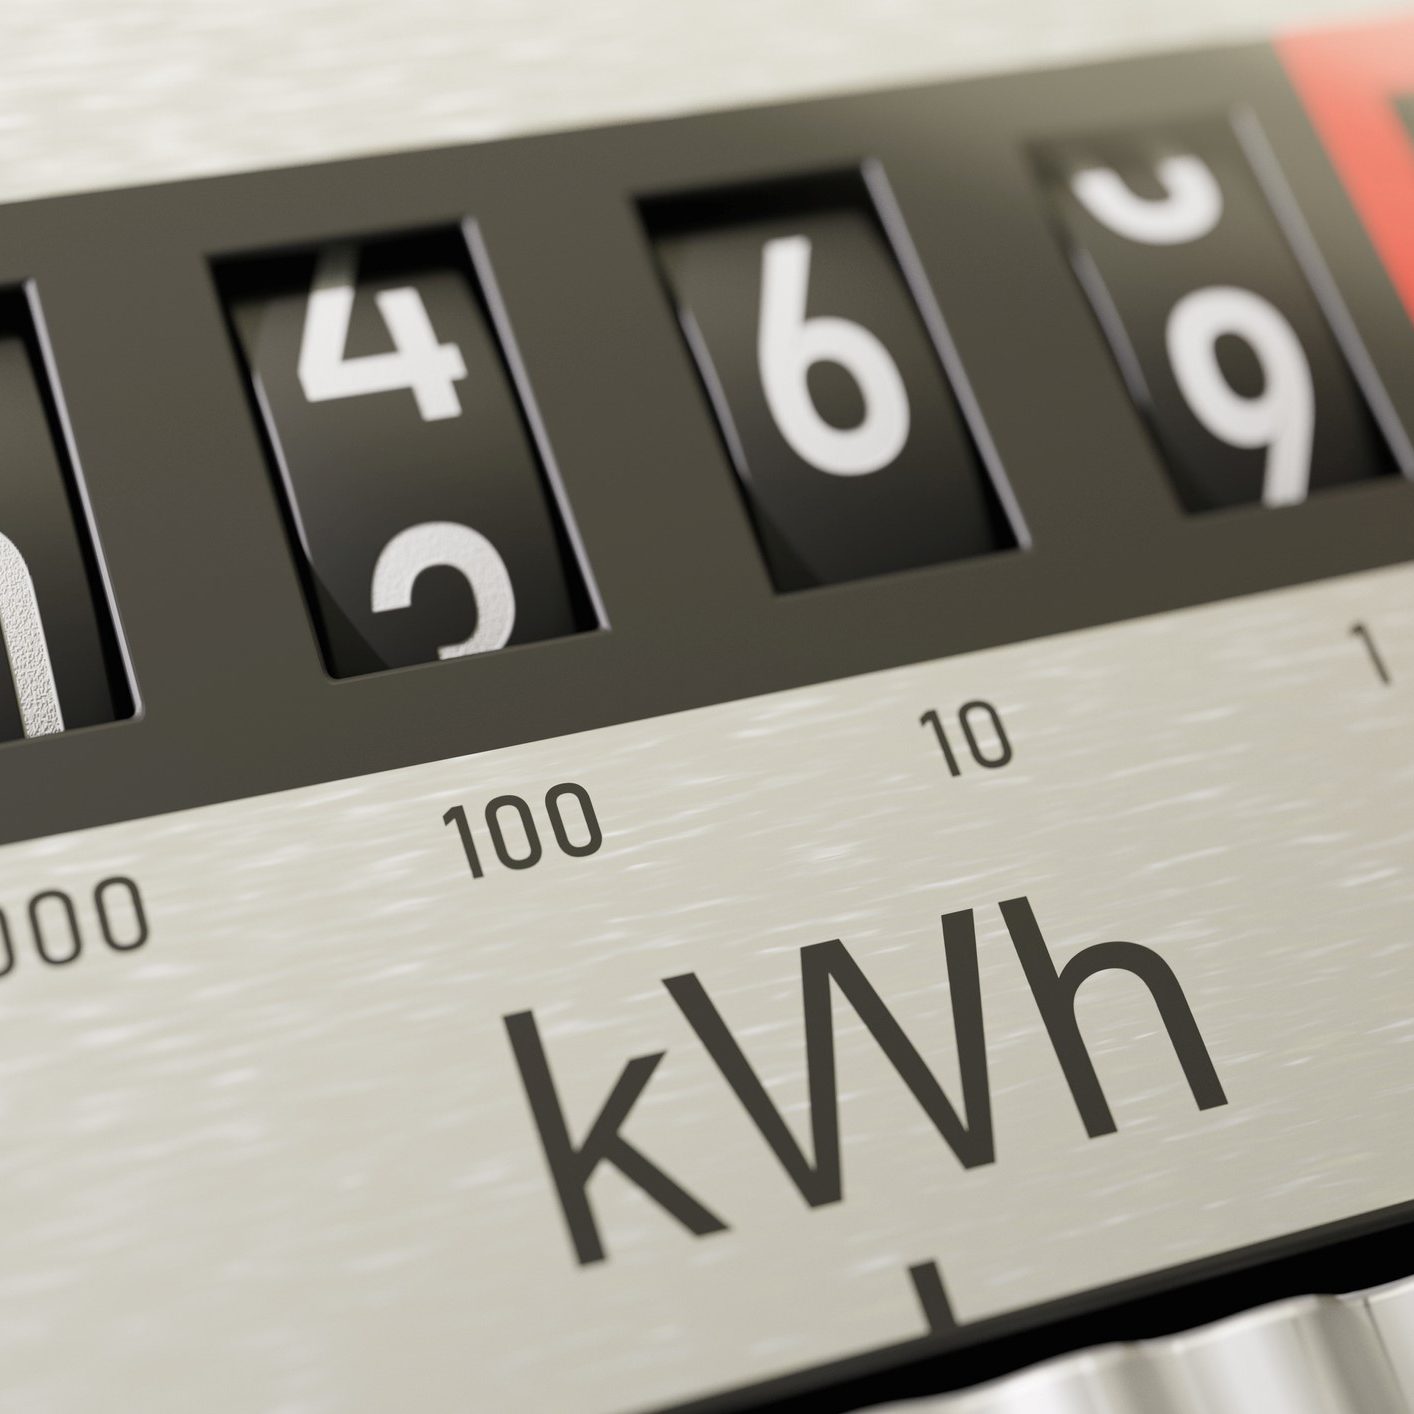 Electric meter KwH